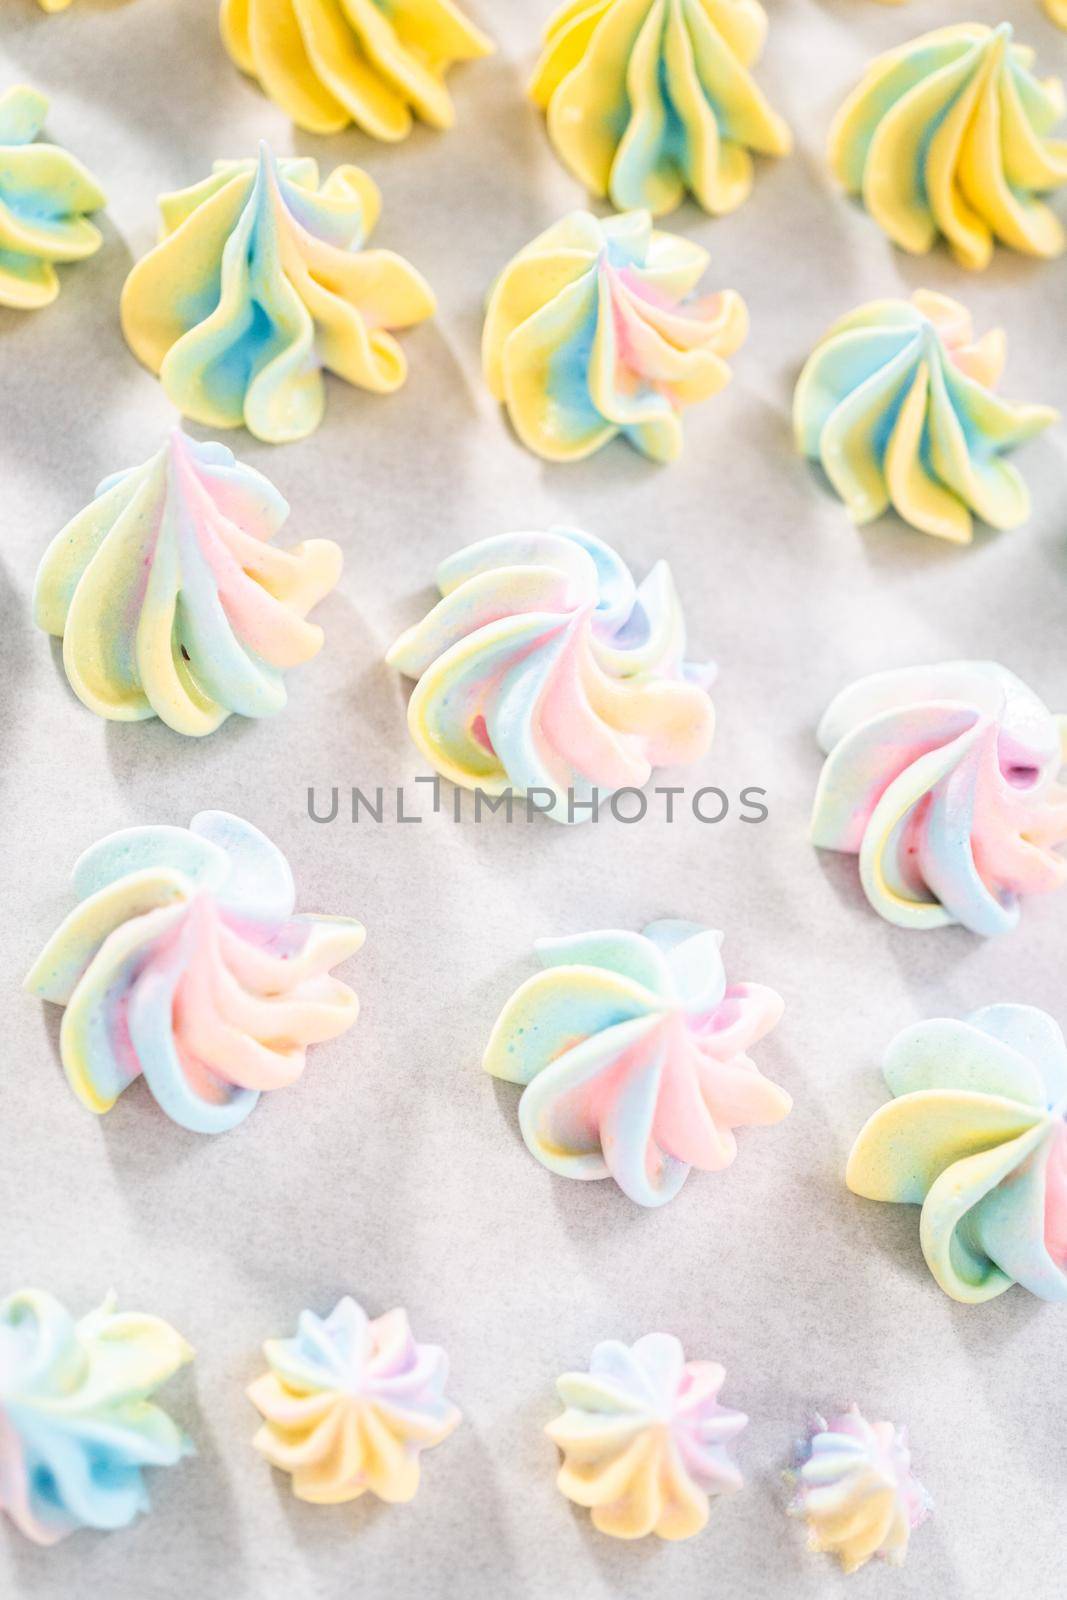 Unicorn meringue cookies by arinahabich